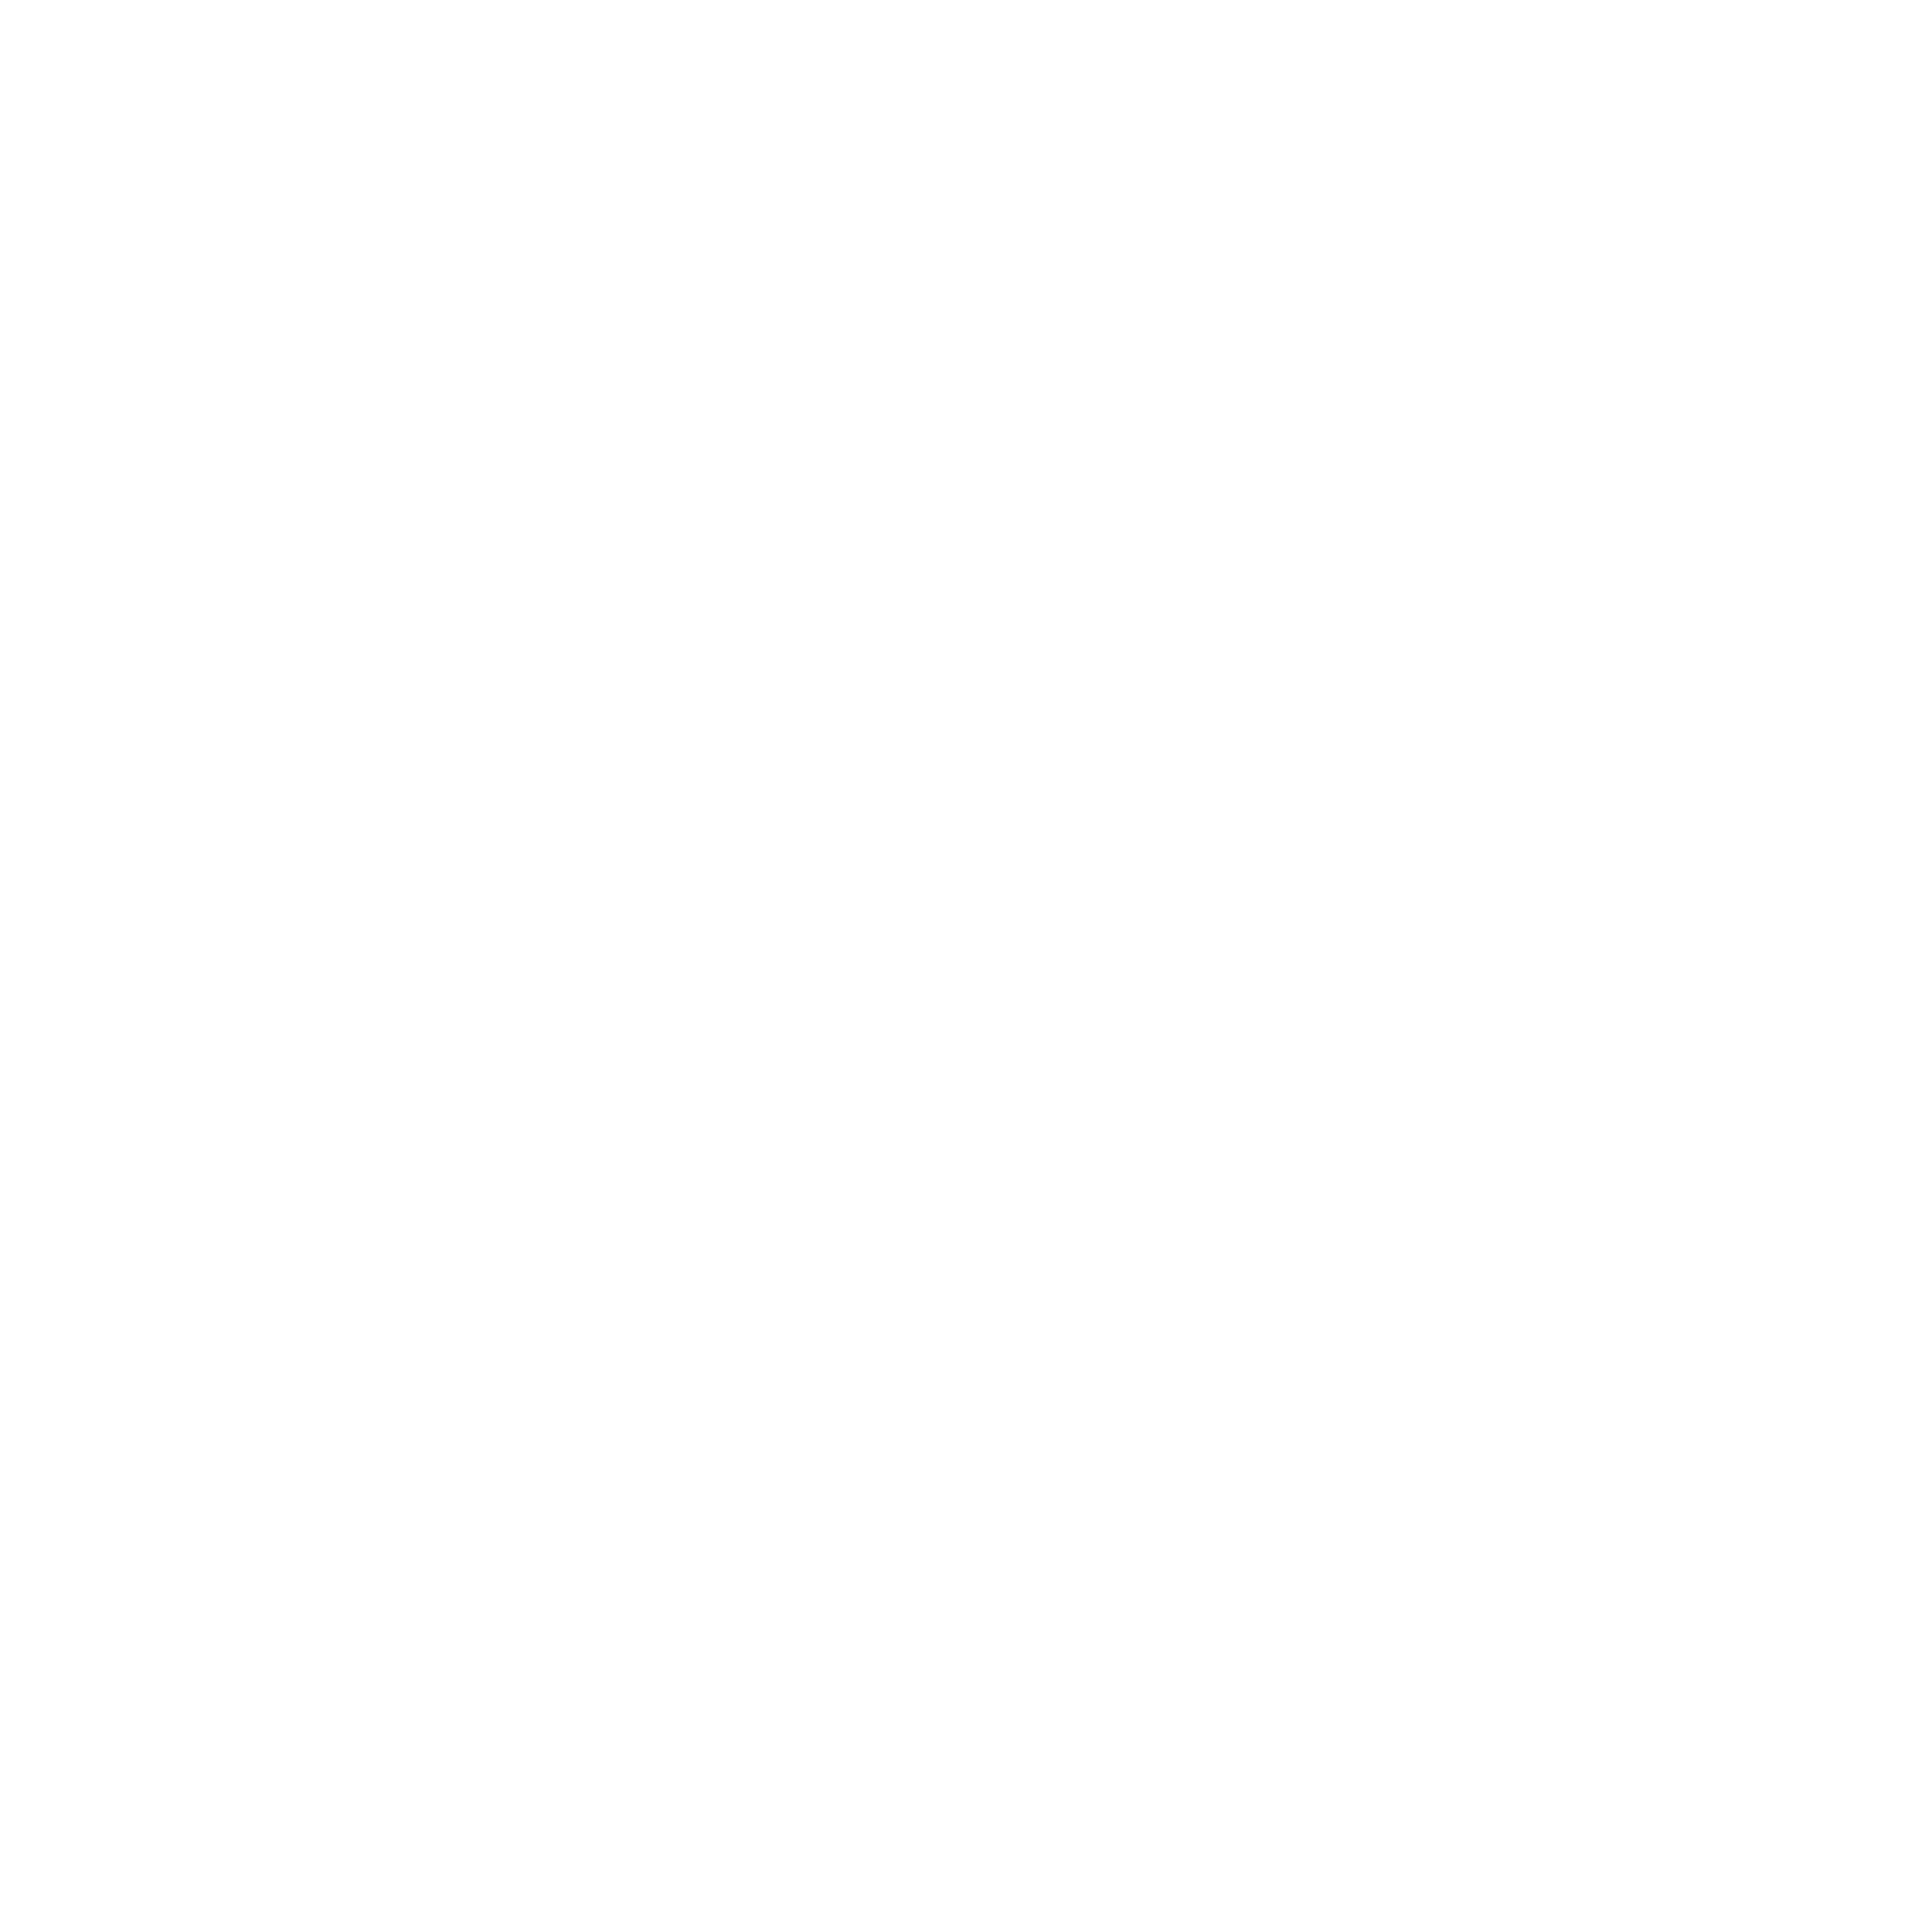 Minnesota District UPCI